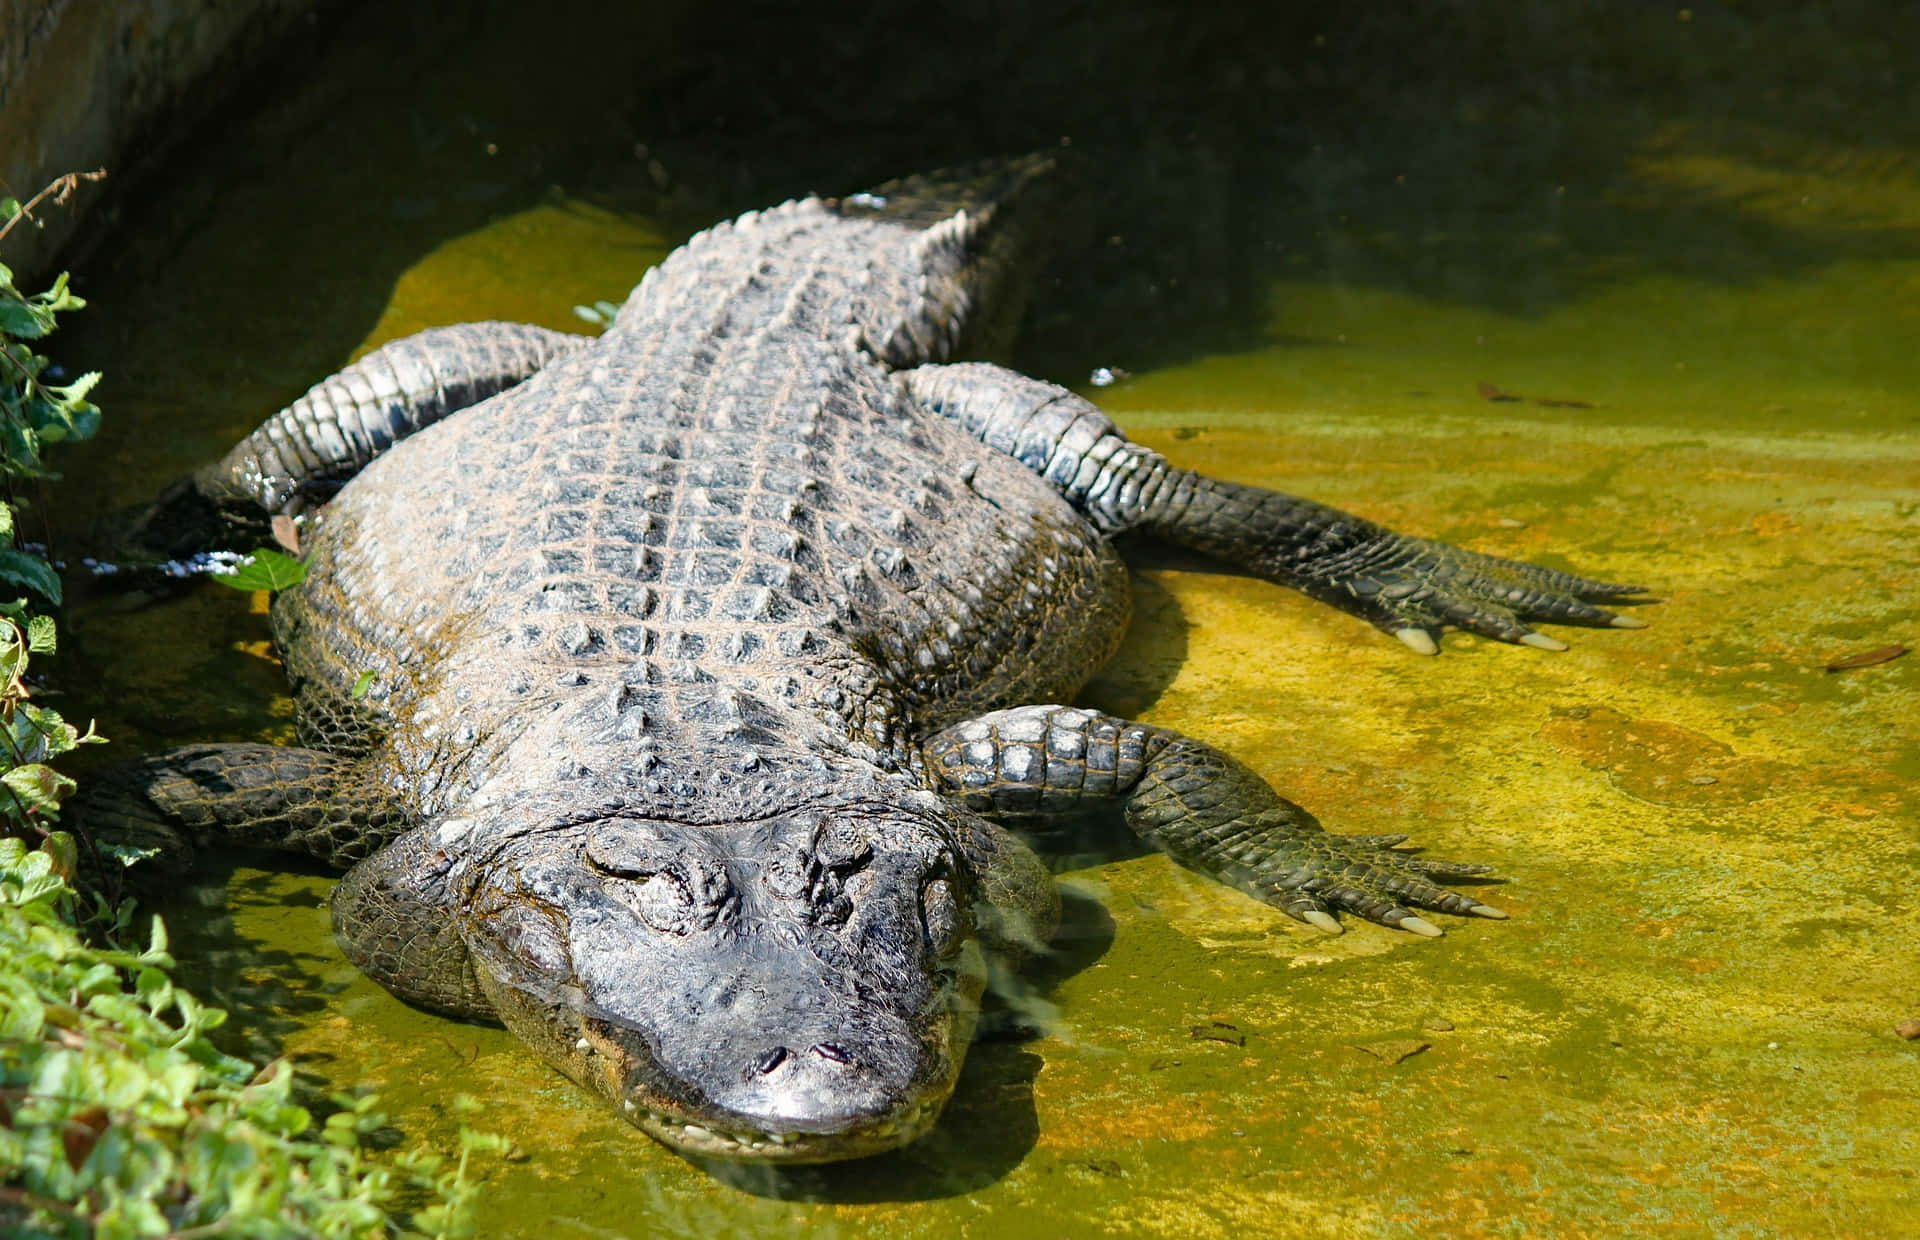 Enspektakulær Alligator I Sit Naturlige Habitat.